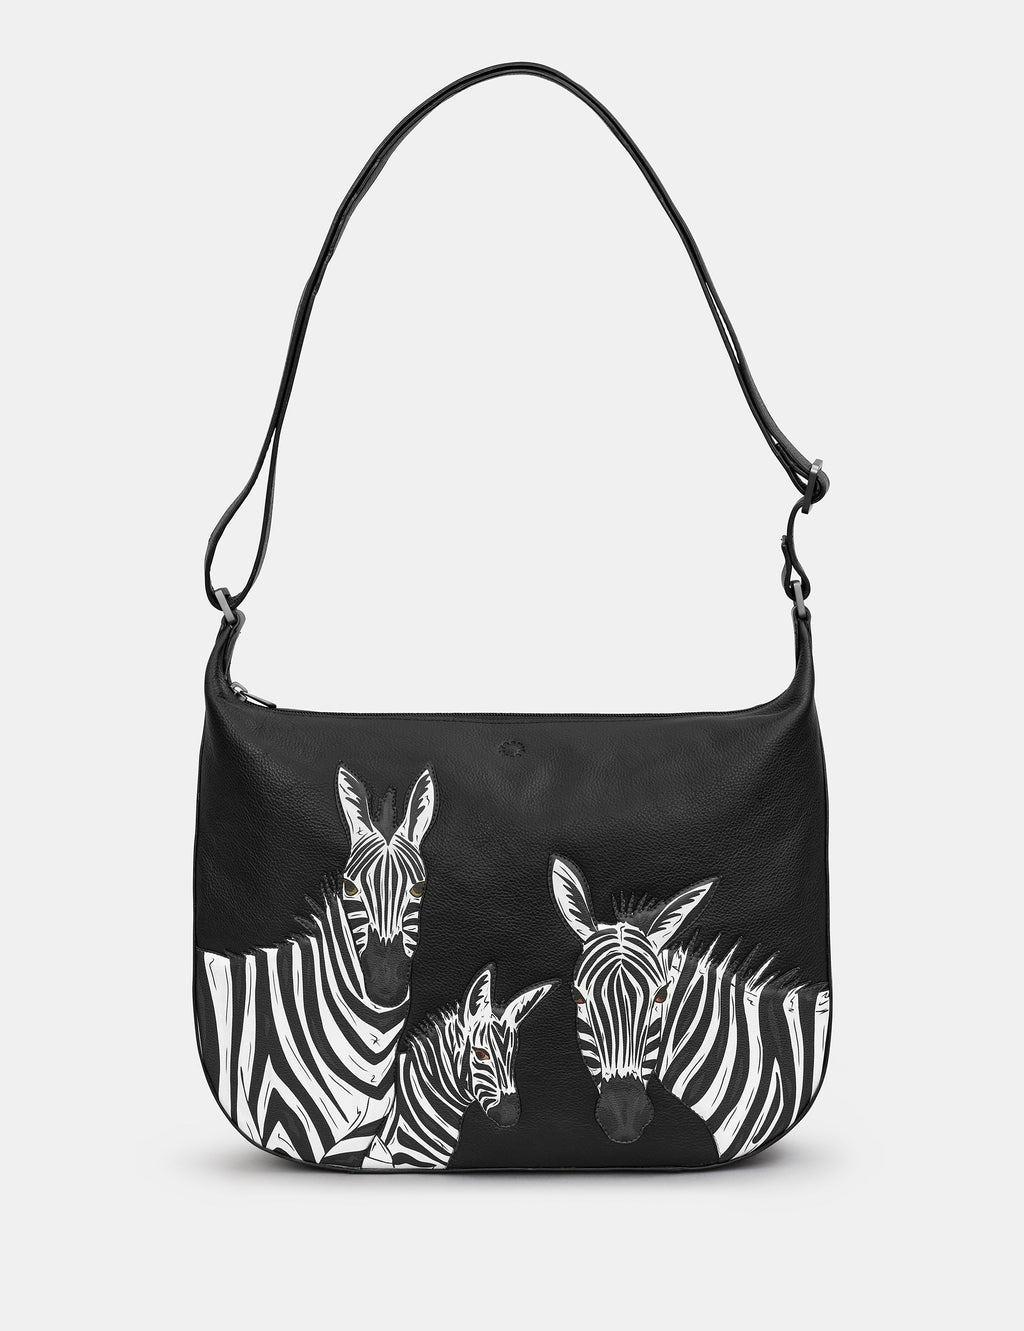 Yoshi - Black Zebra Leather Hobo Bag